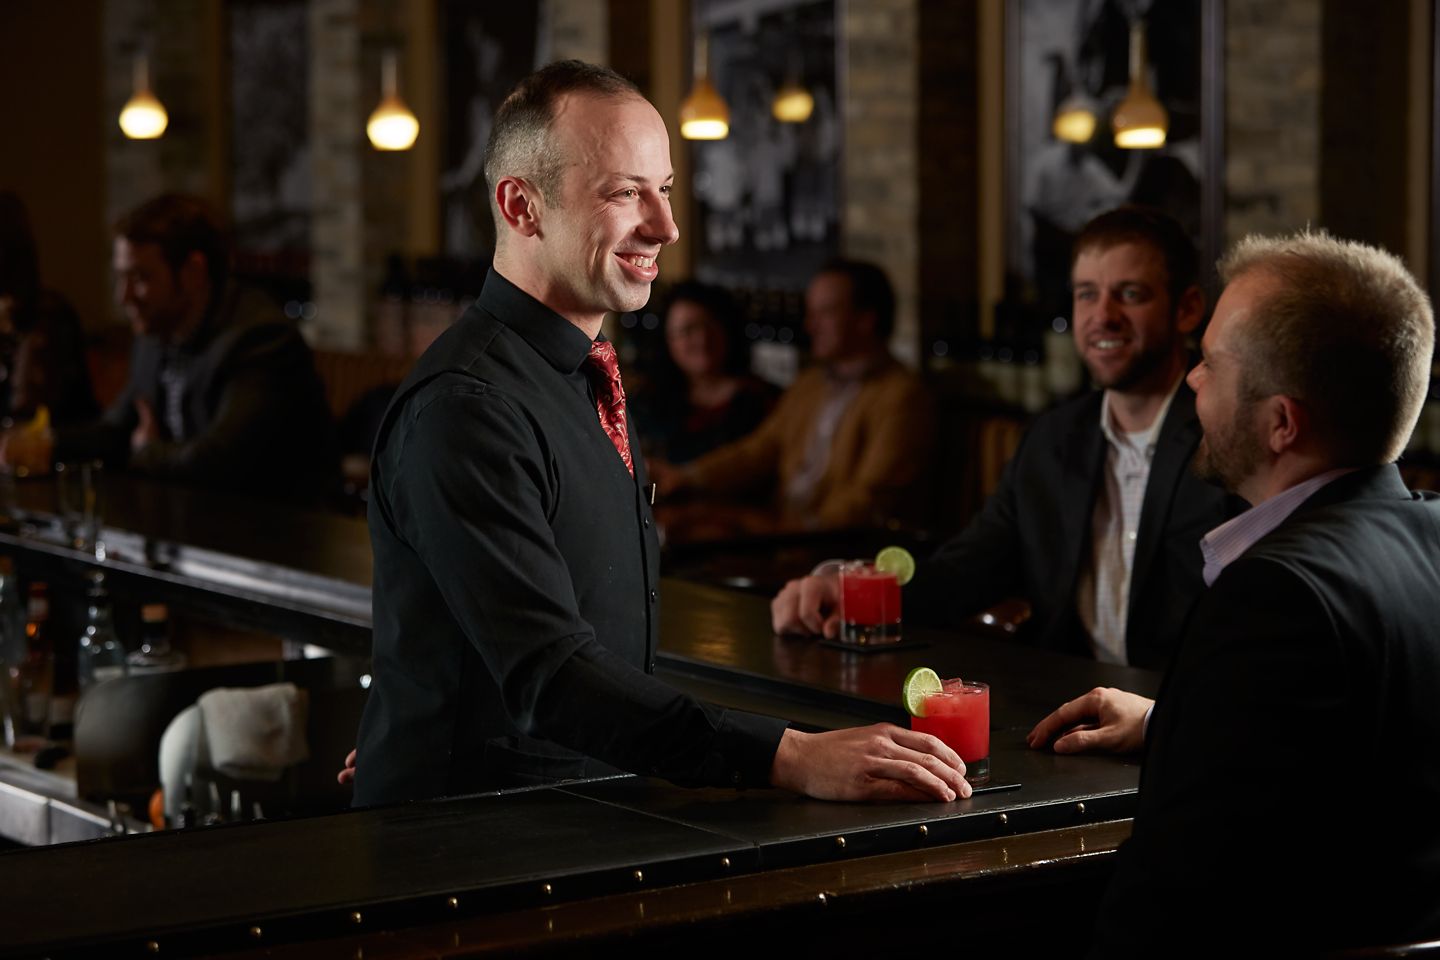 a mixologist behind a bar smiling at a guest